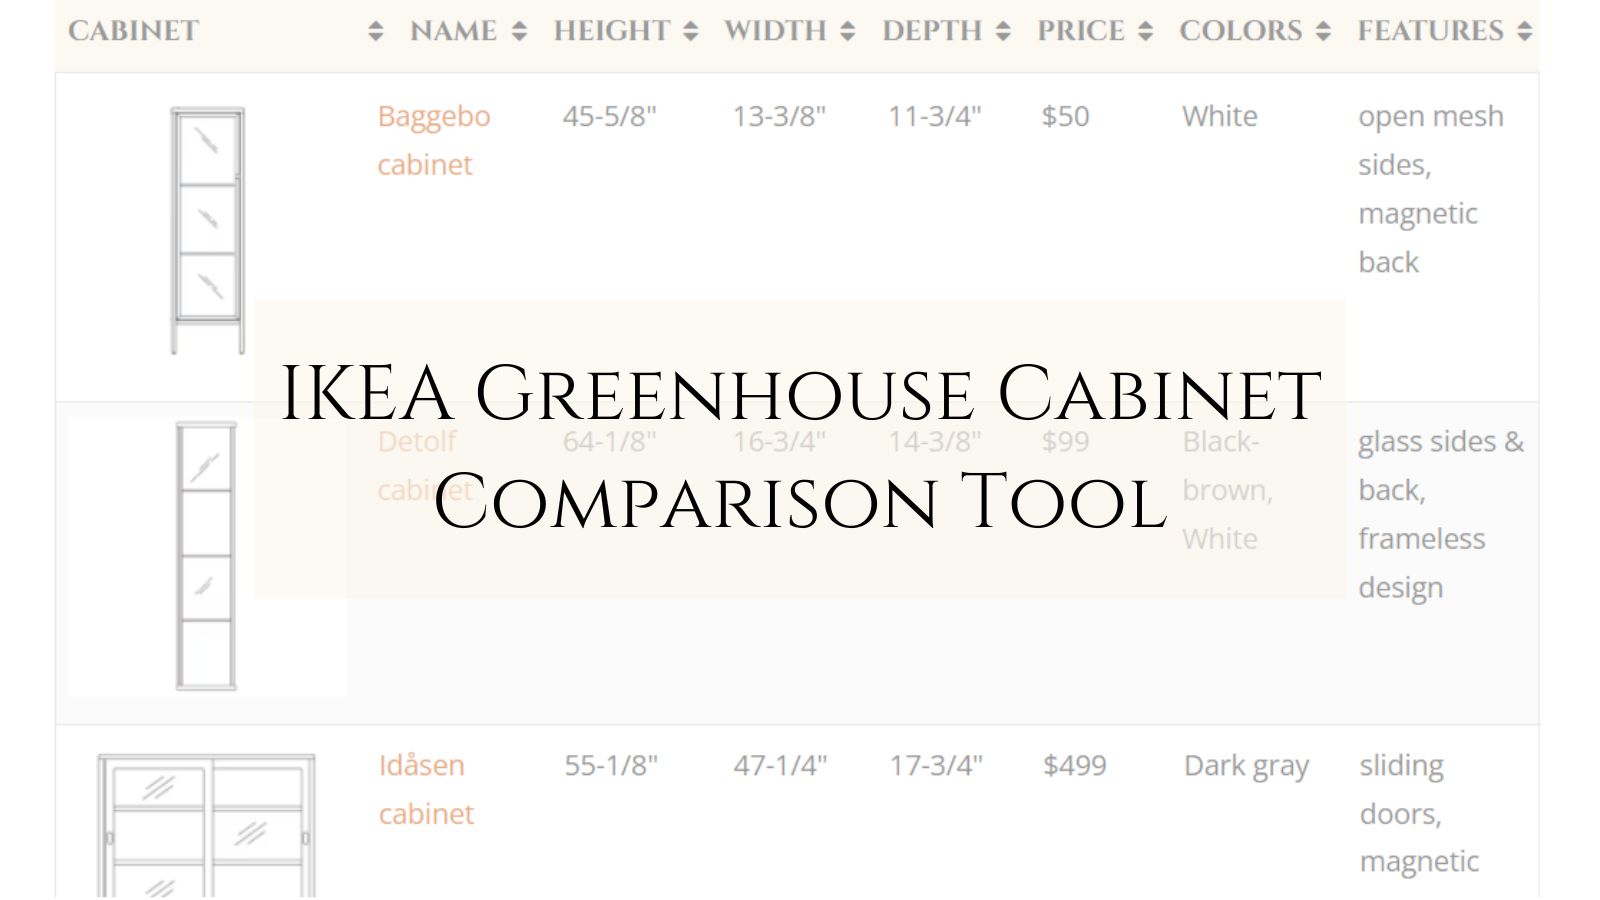 IKEA Greenhouse Cabinet Comparison Tool